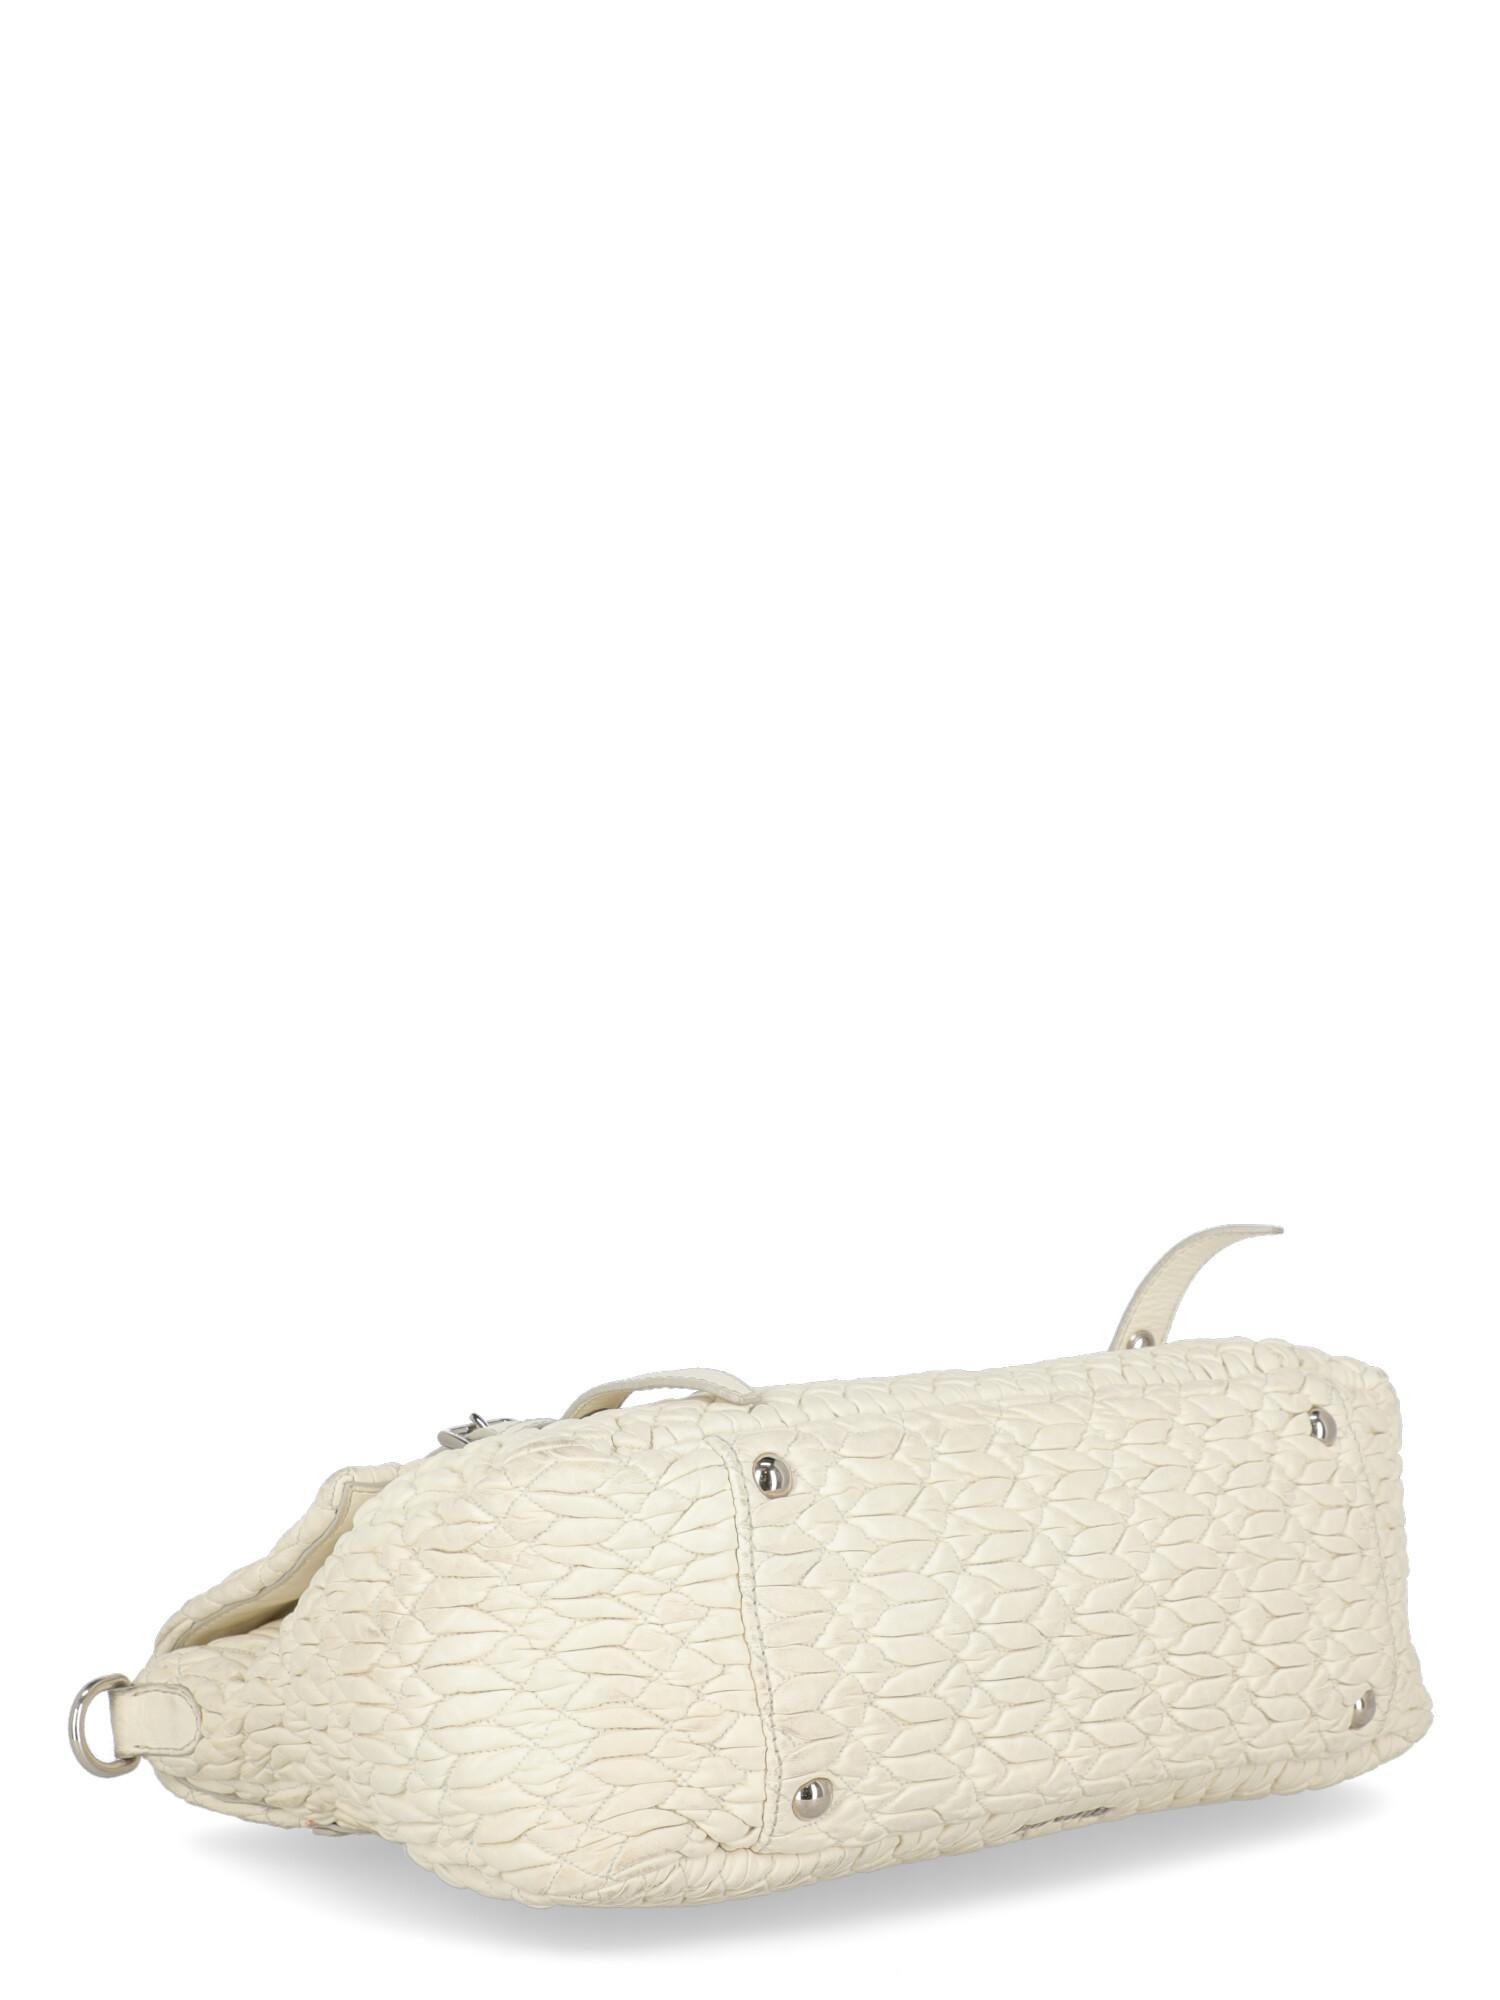 Miu Miu  Women   Shoulder bags  White Leather  For Sale 1